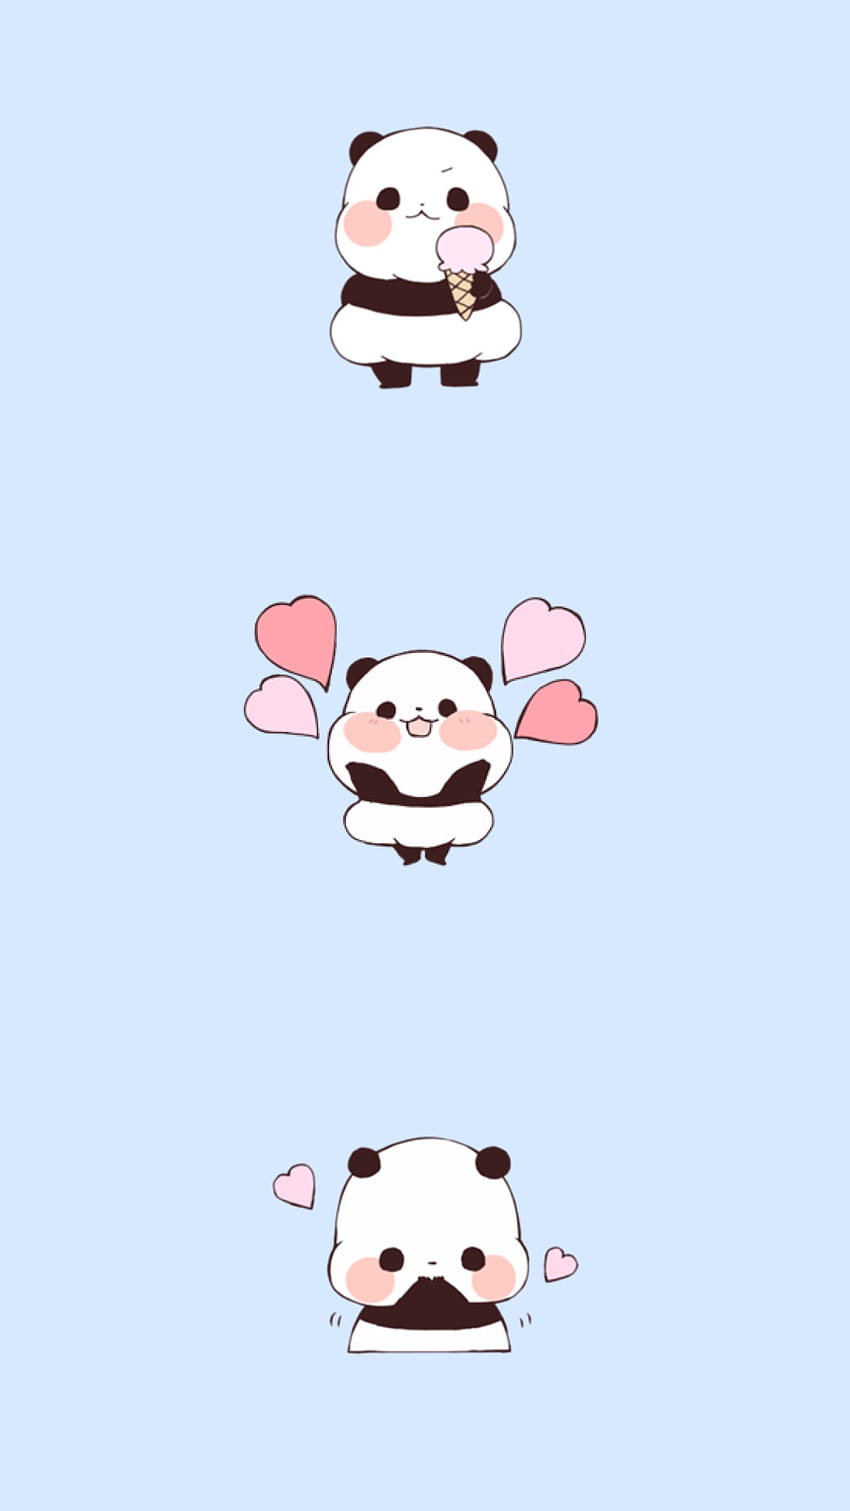 Kawaii Cute Panda Drawing Images  Free Download on Freepik